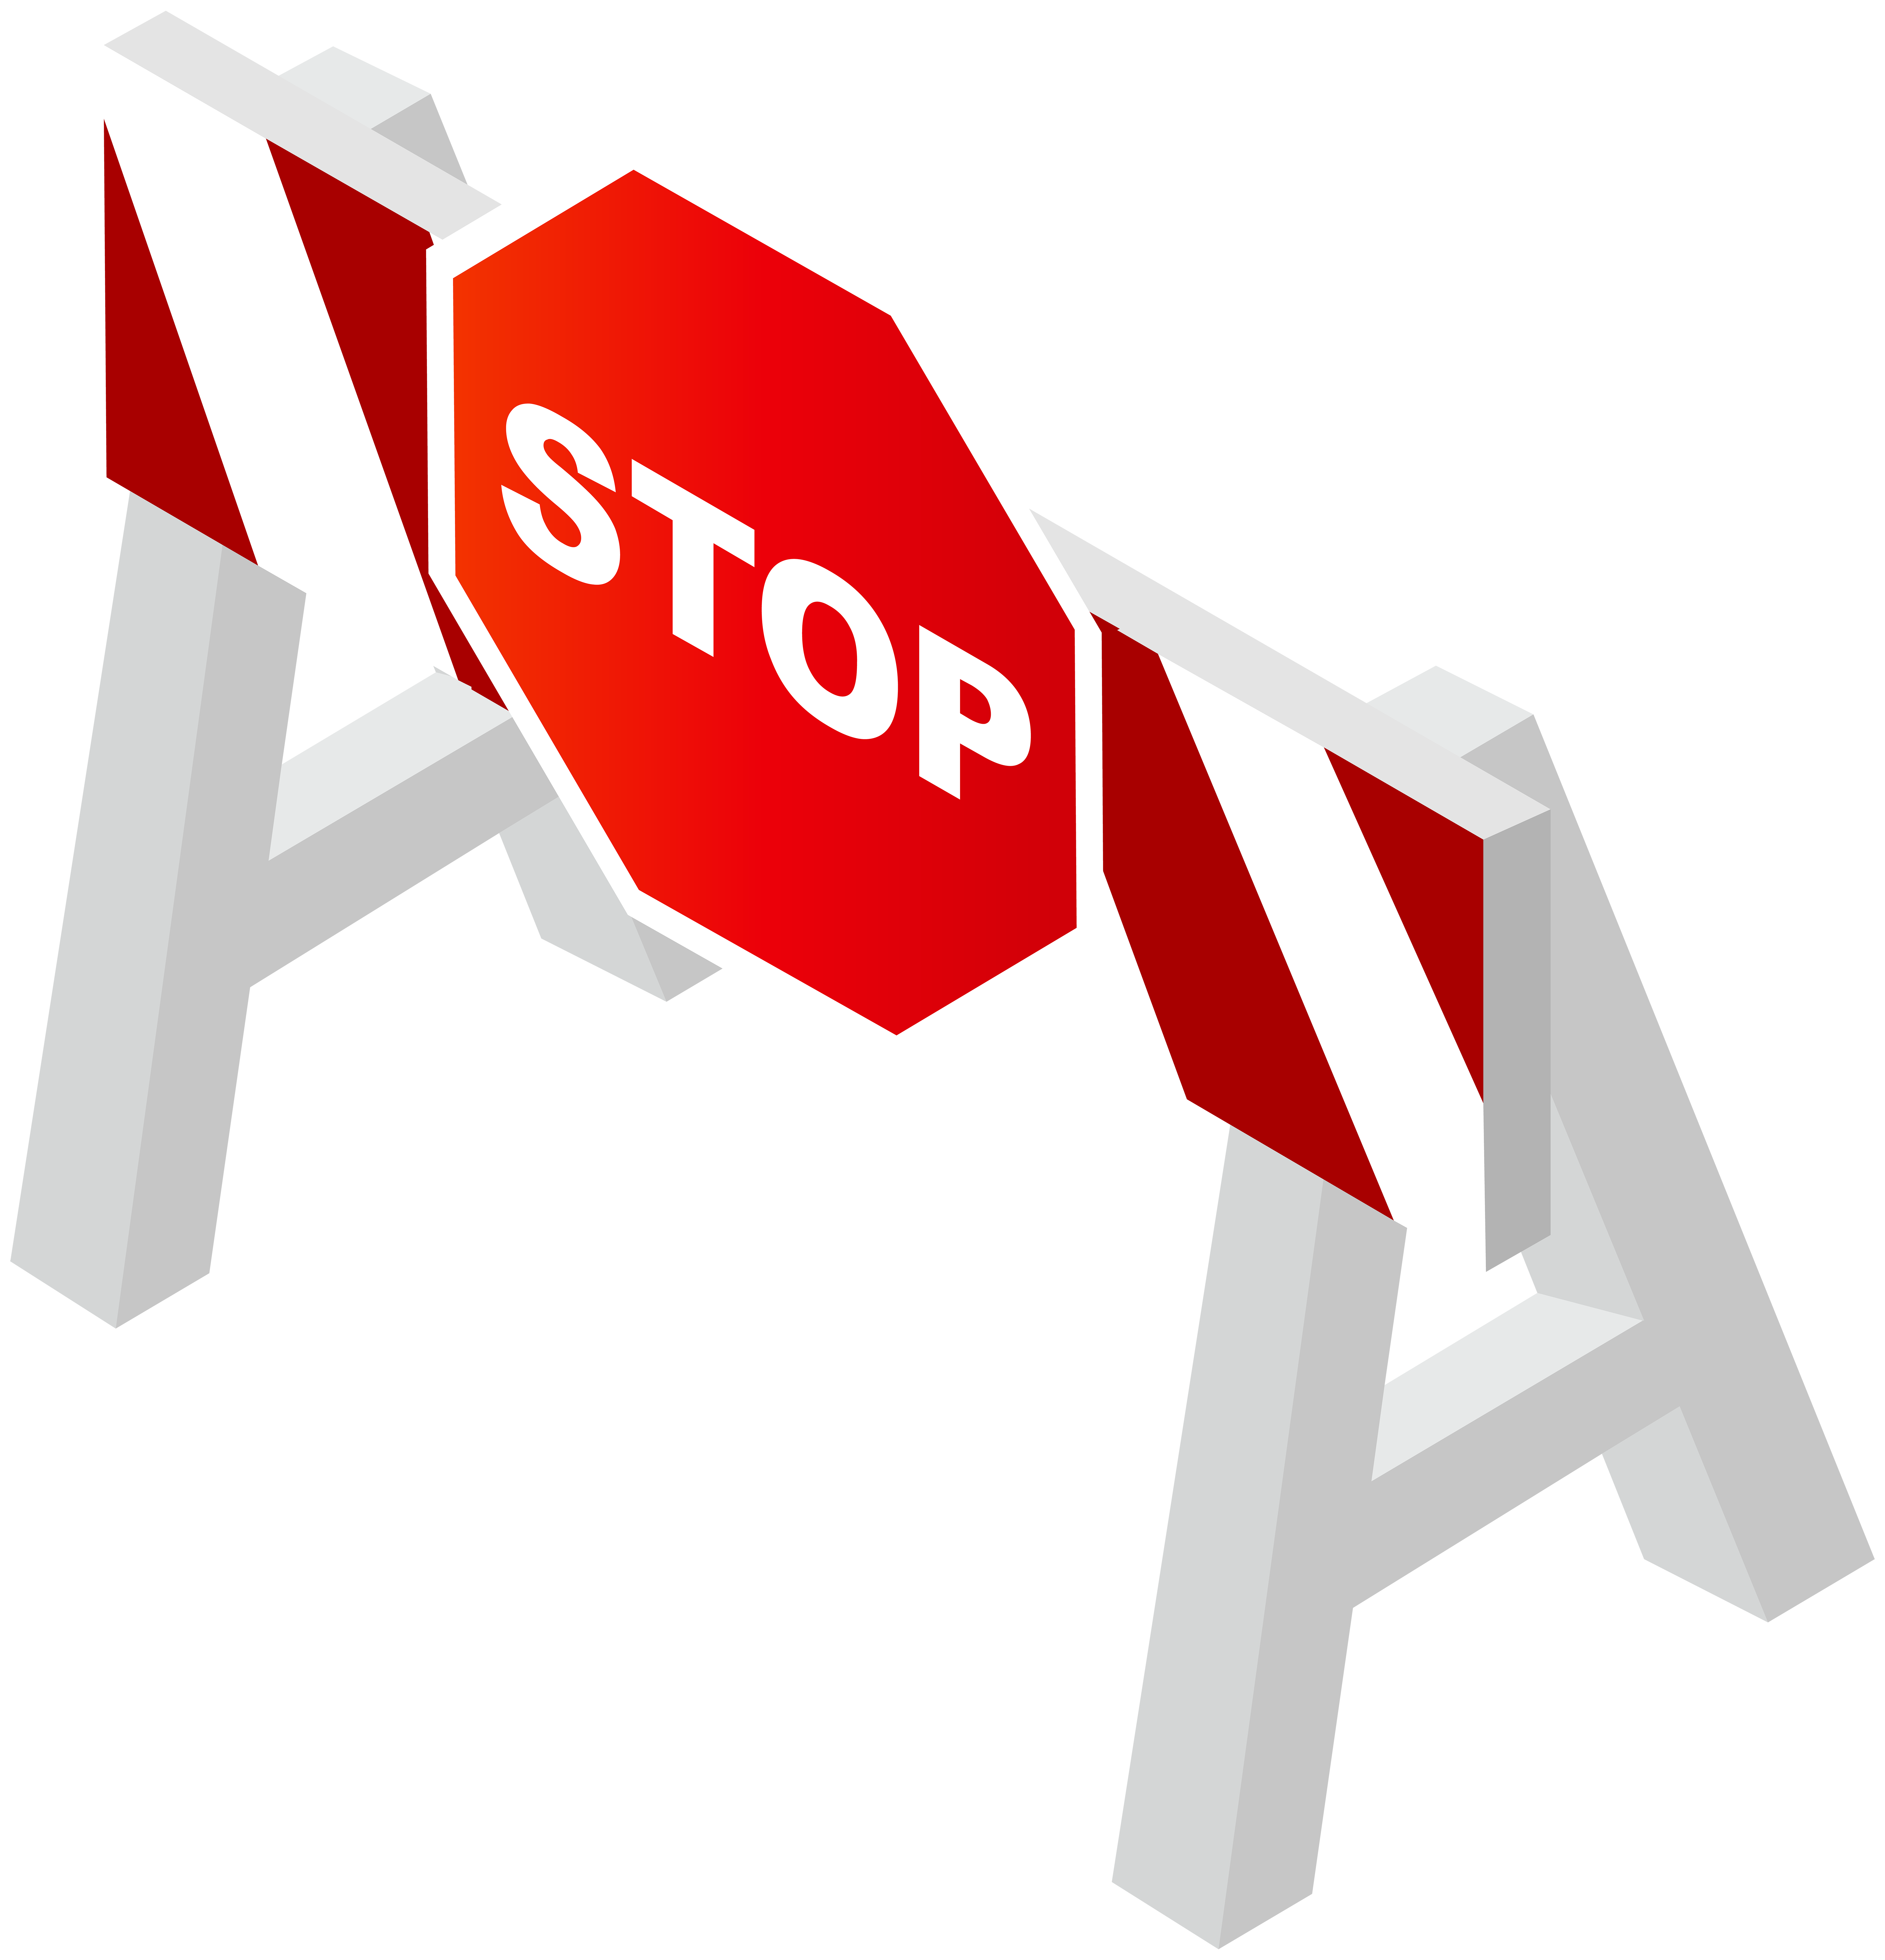 stop sign clip art png